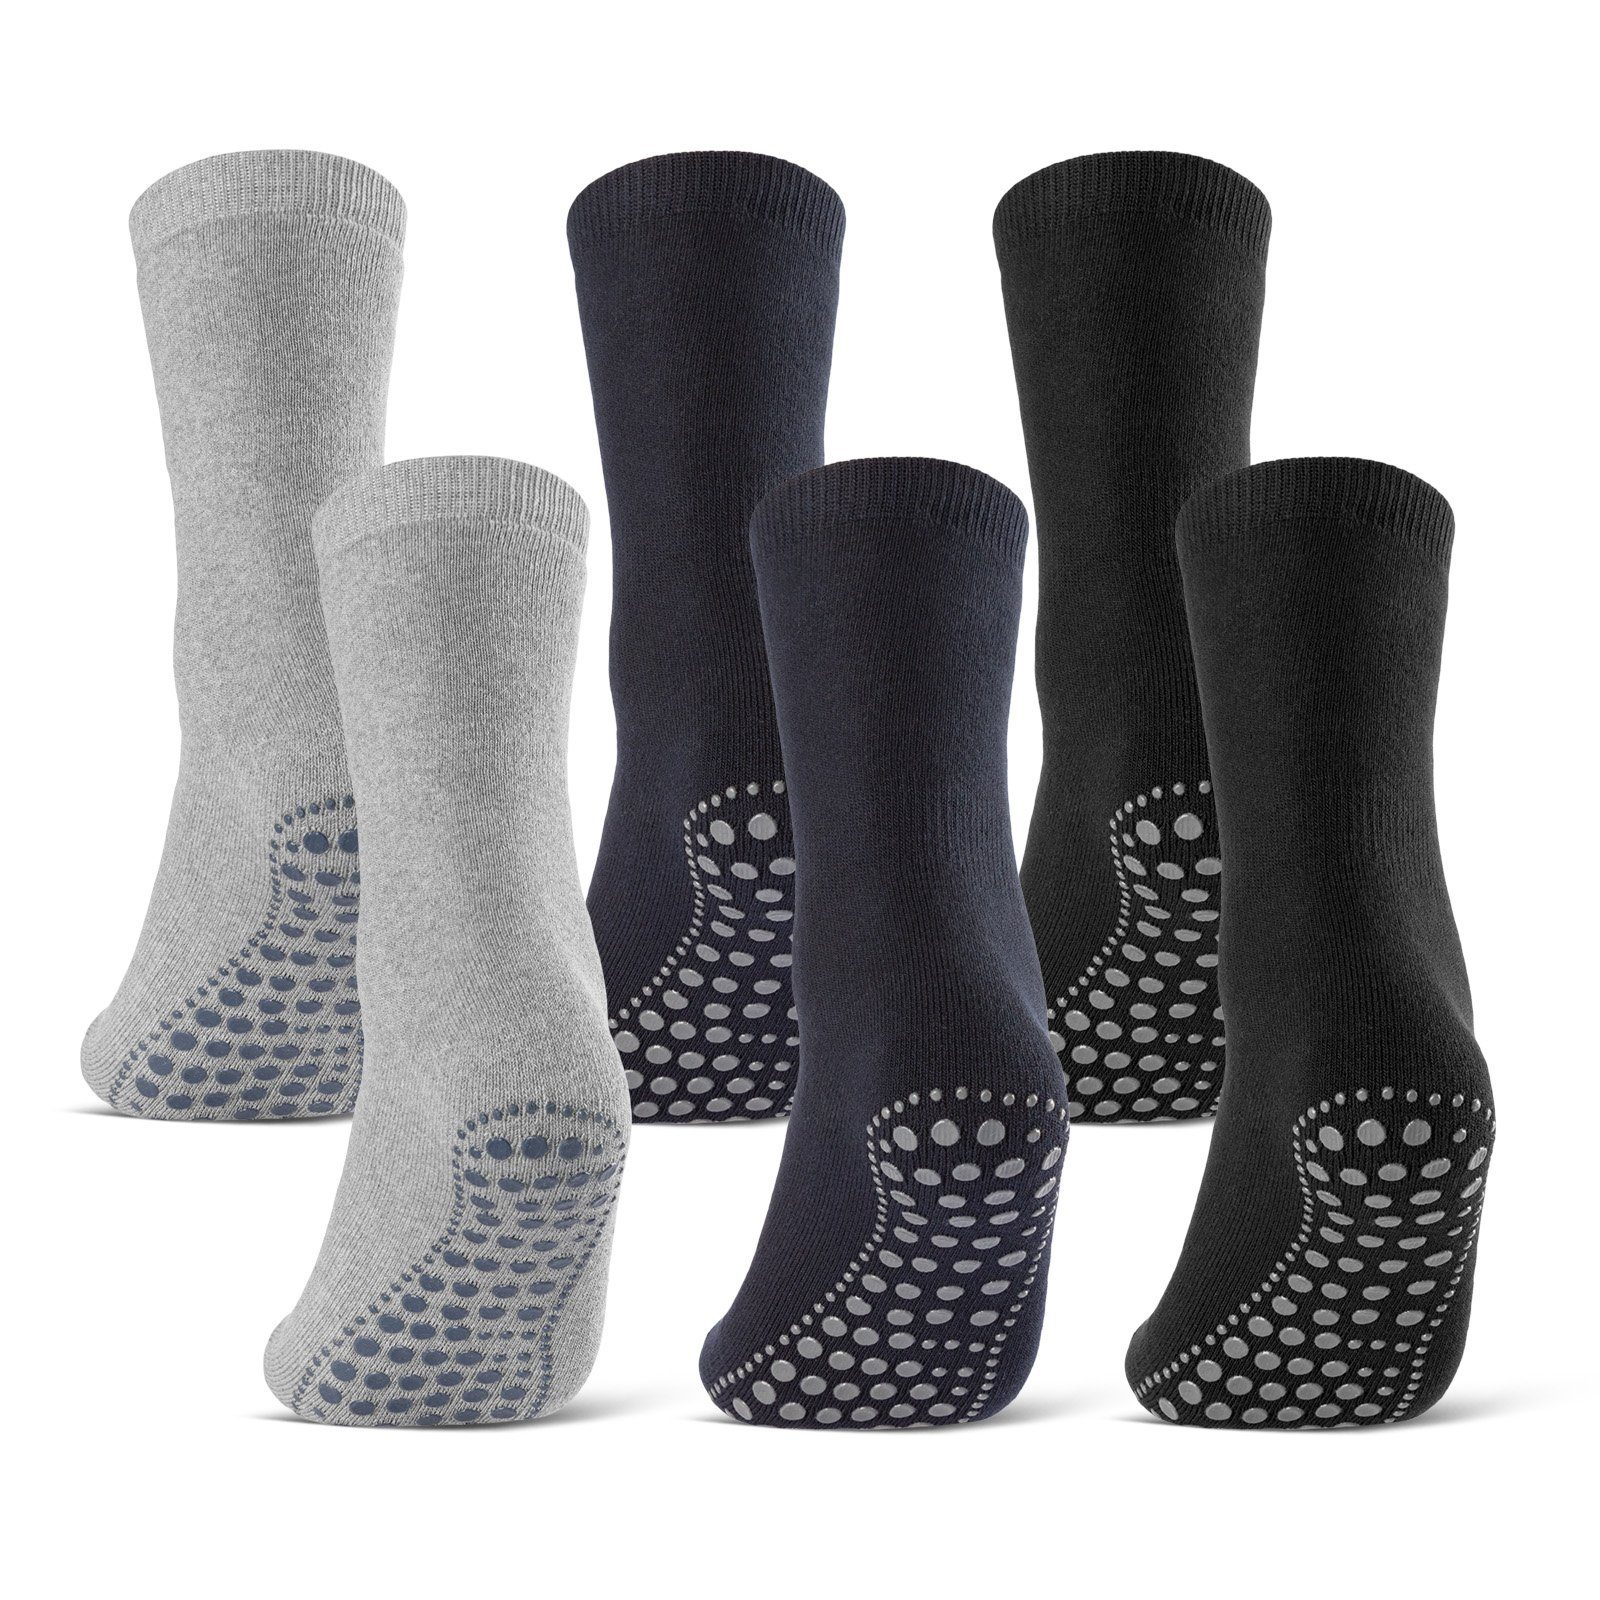 sockenkauf24 ABS-Socken 3 oder 6 Paar "Premium" Anti Rutsch Socken Damen Herren (Schwarz, Blau, Grau, 6-Paar, 39-42) ABS Socken Noppen Stoppersocken - 8600 WP